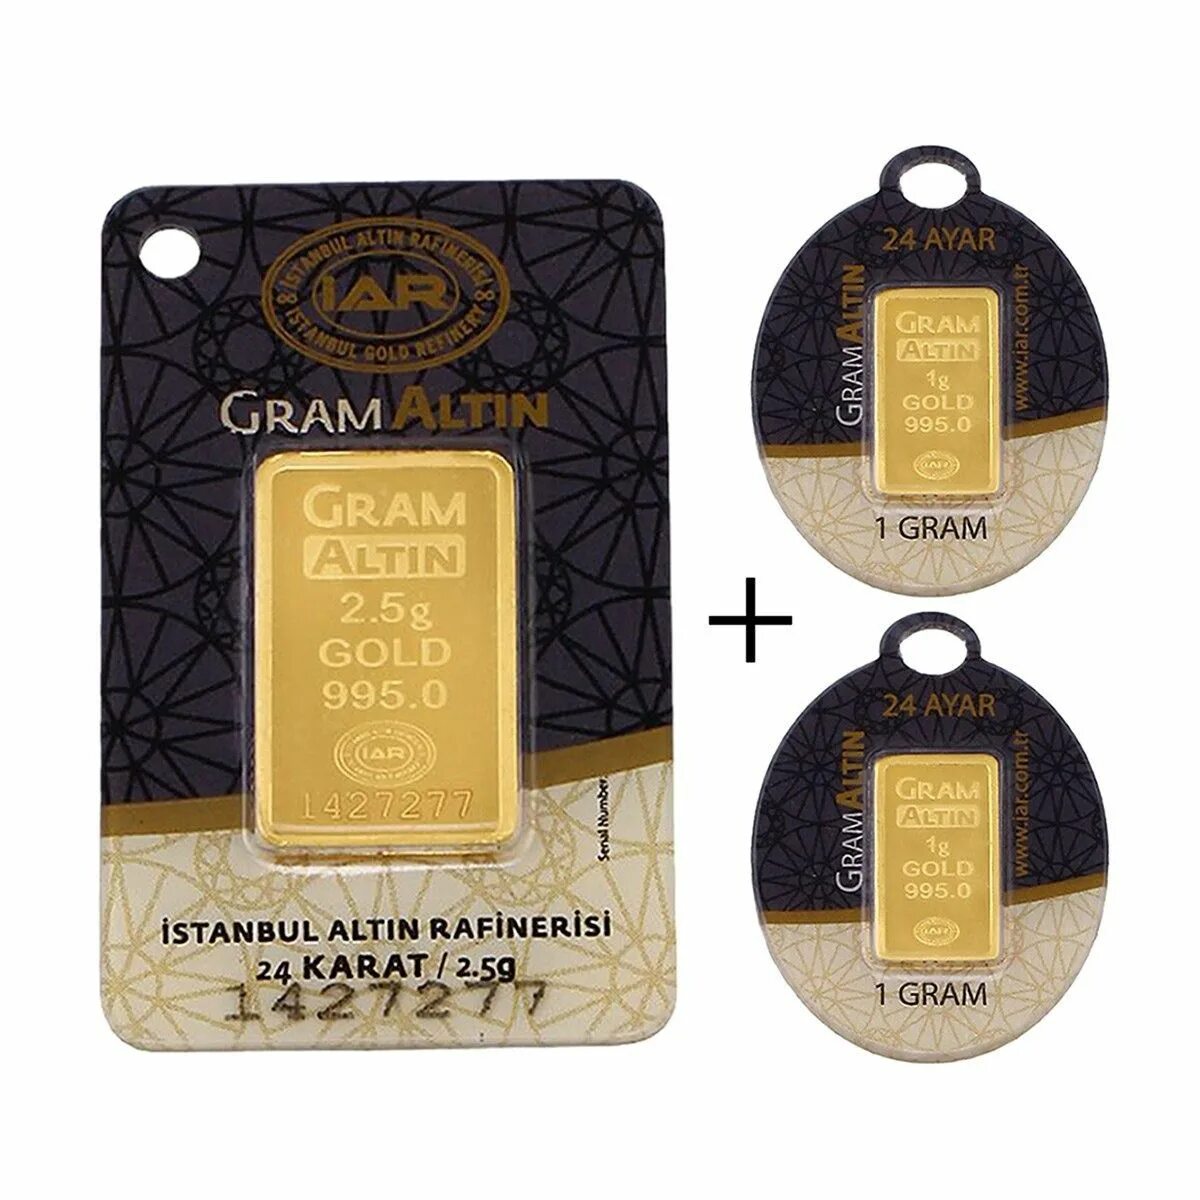 Золотой черкесск. Золота Надир Голд. Gold 1 gram. 50 Gram kulce Altin. Gold gram Messenger Tel Talaei.